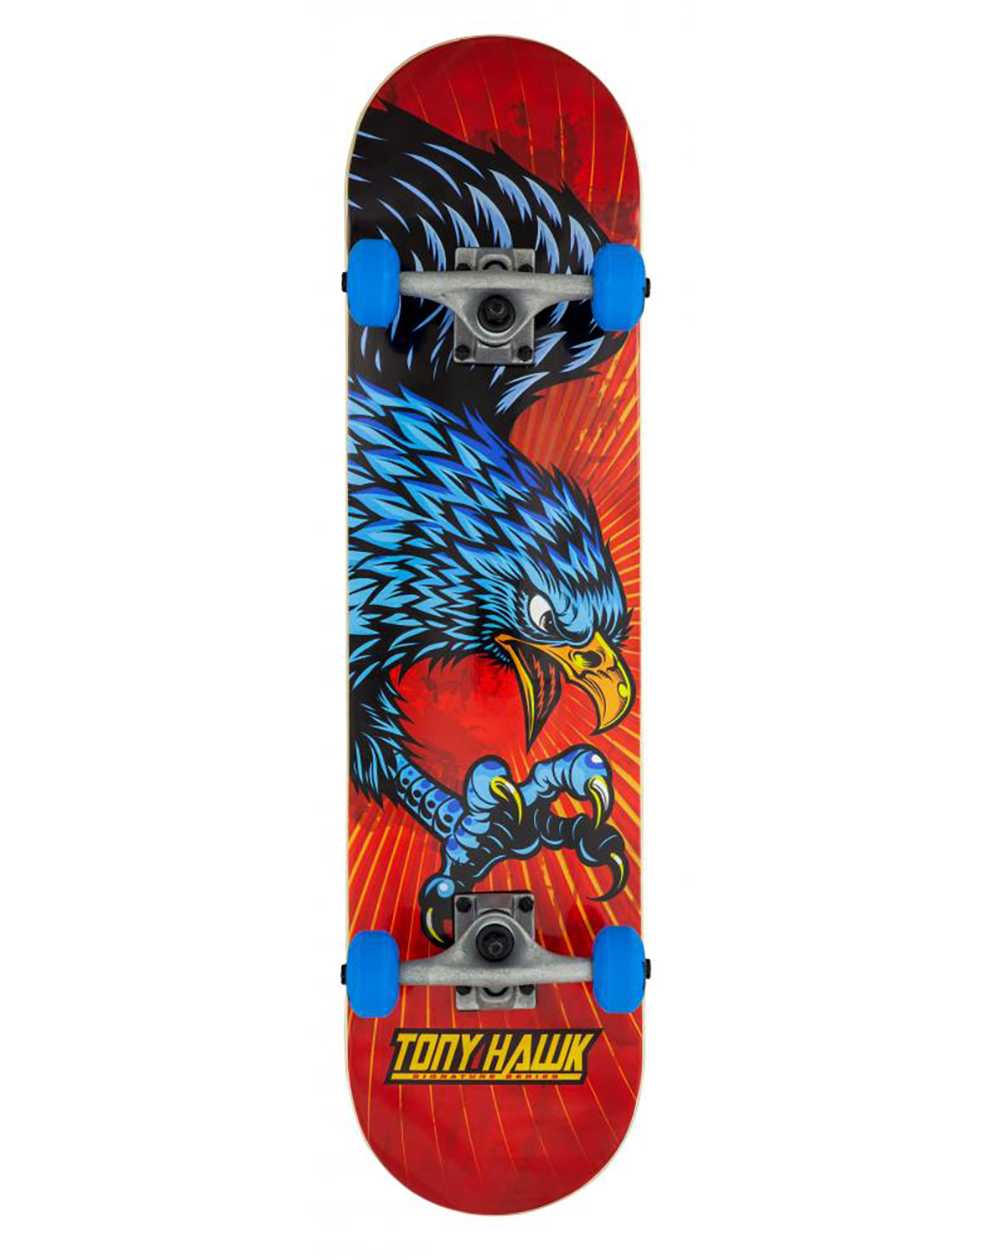 Tony Hawk Skateboard Completo Diving Hawk 7.75"